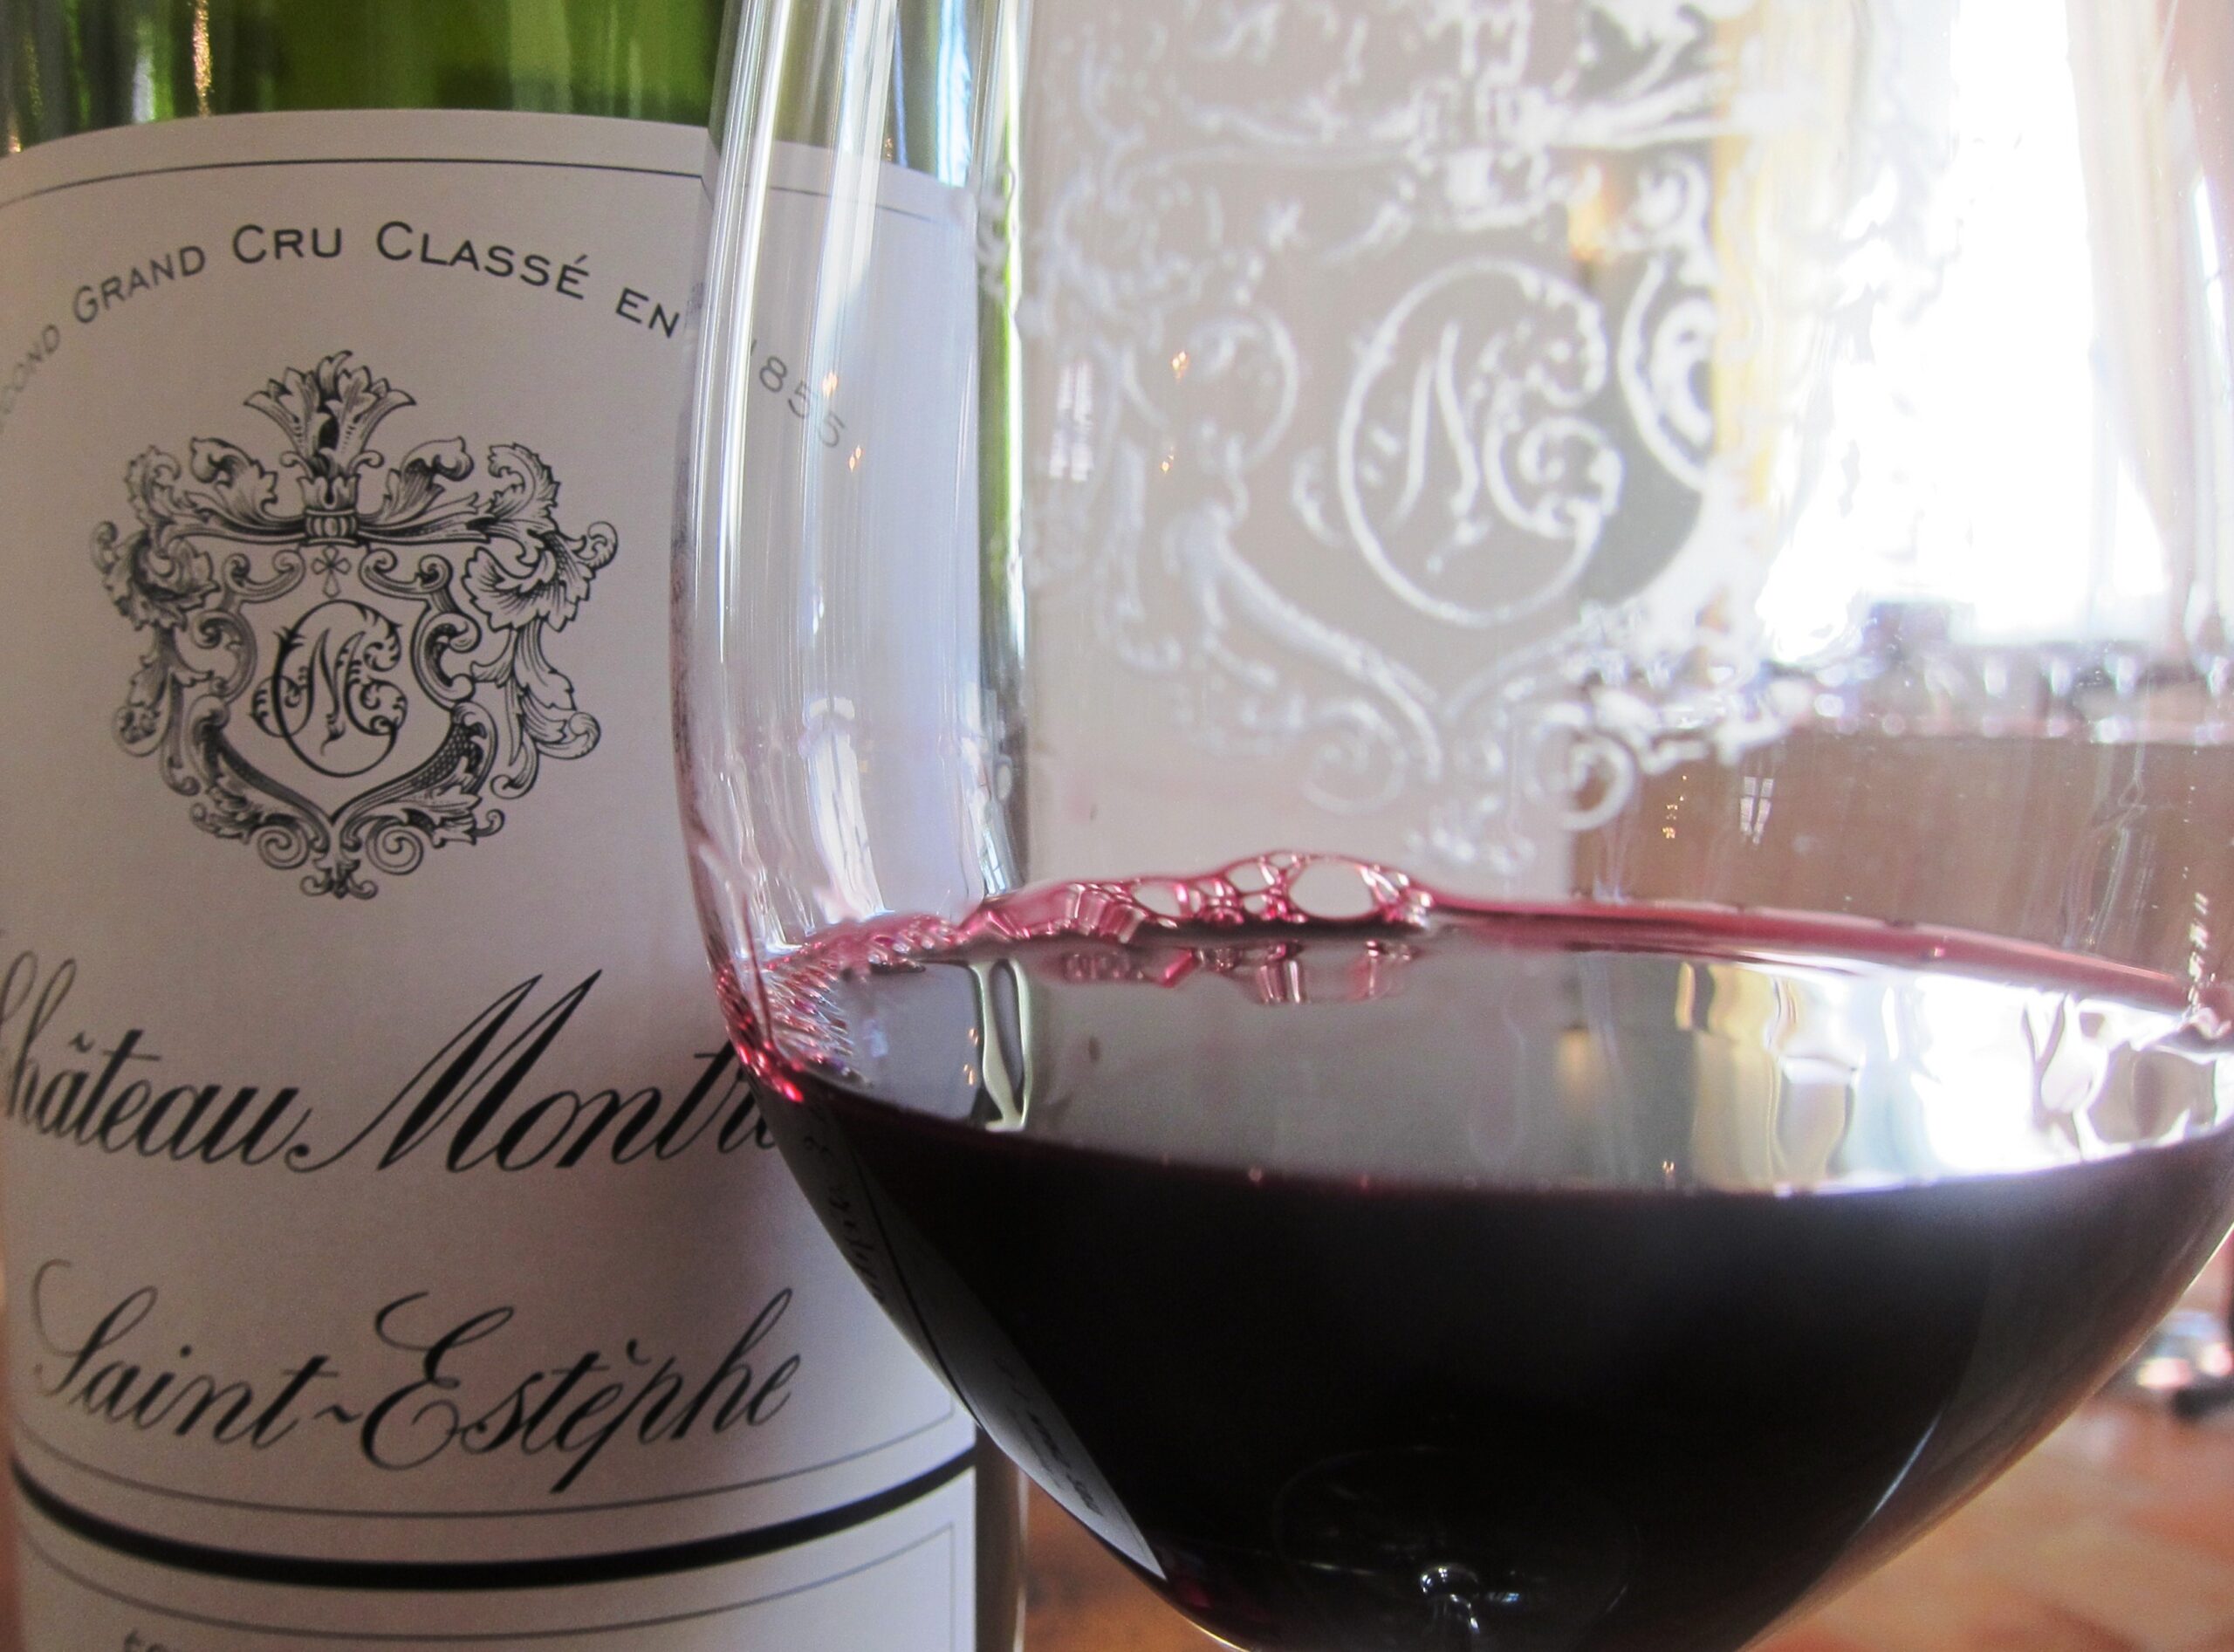 2010 Chateau Montrose & Tronquoy, Big Dense Tannic, Intense Wine